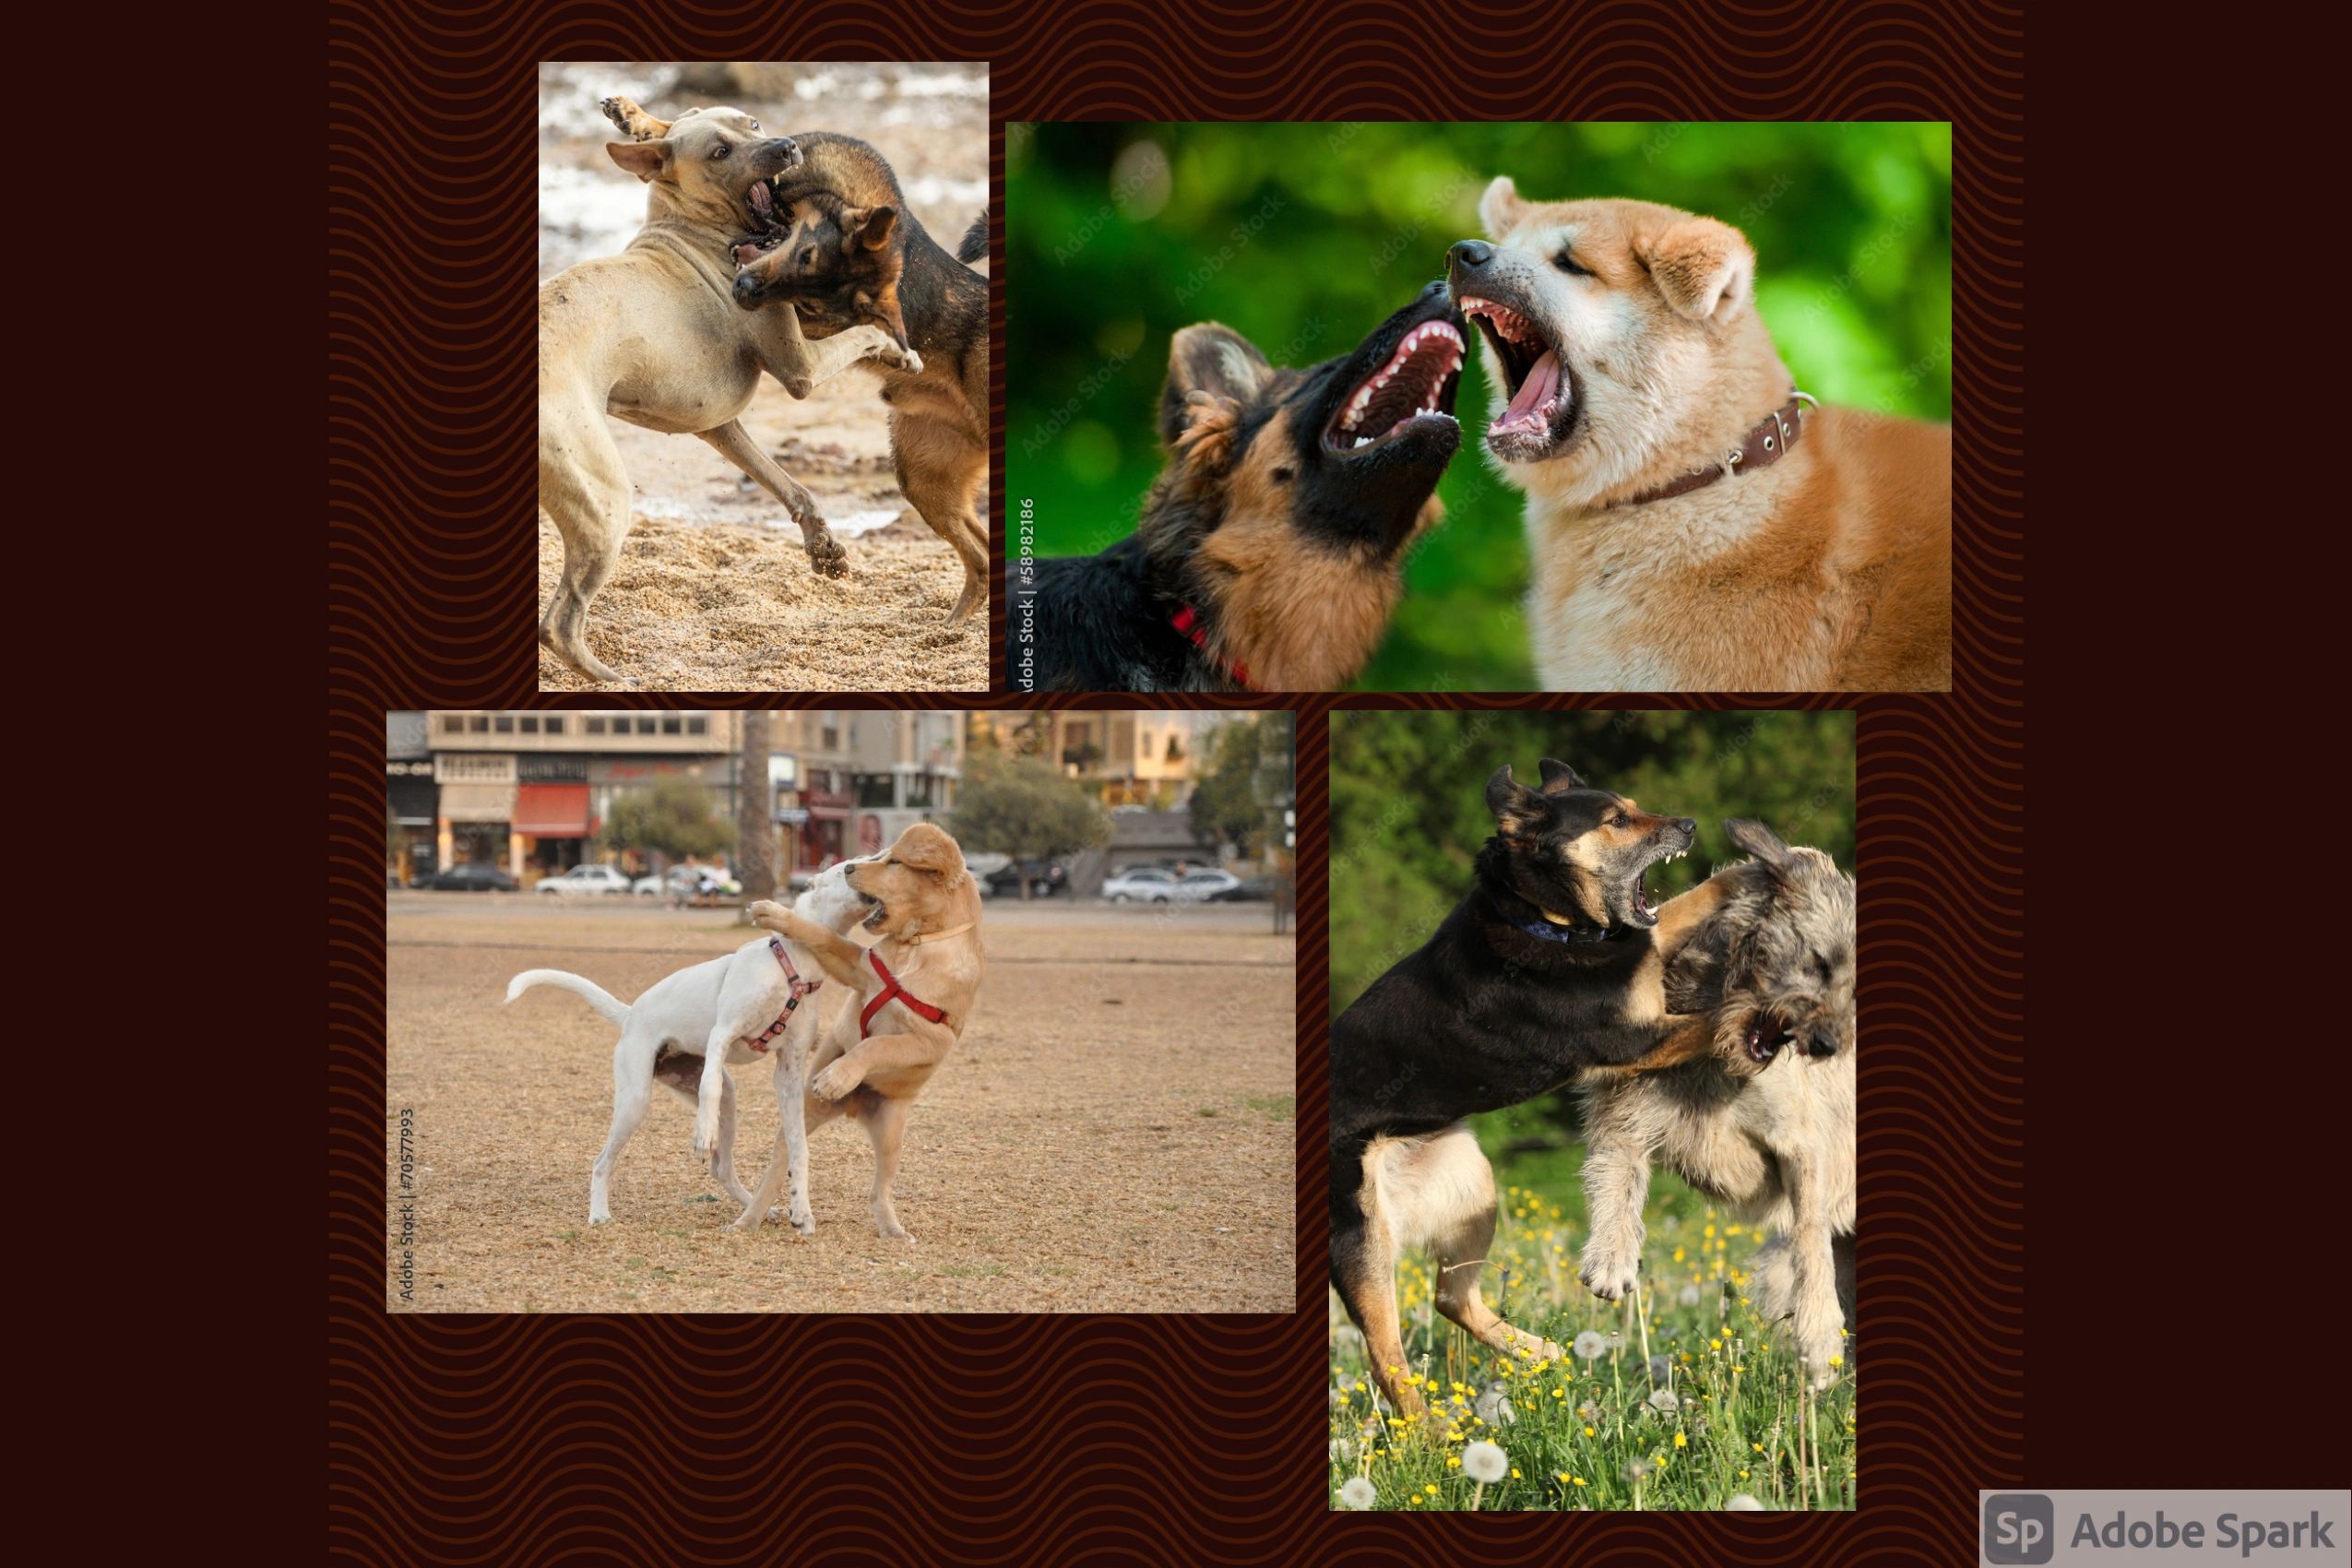 what is aggressive dog behavior